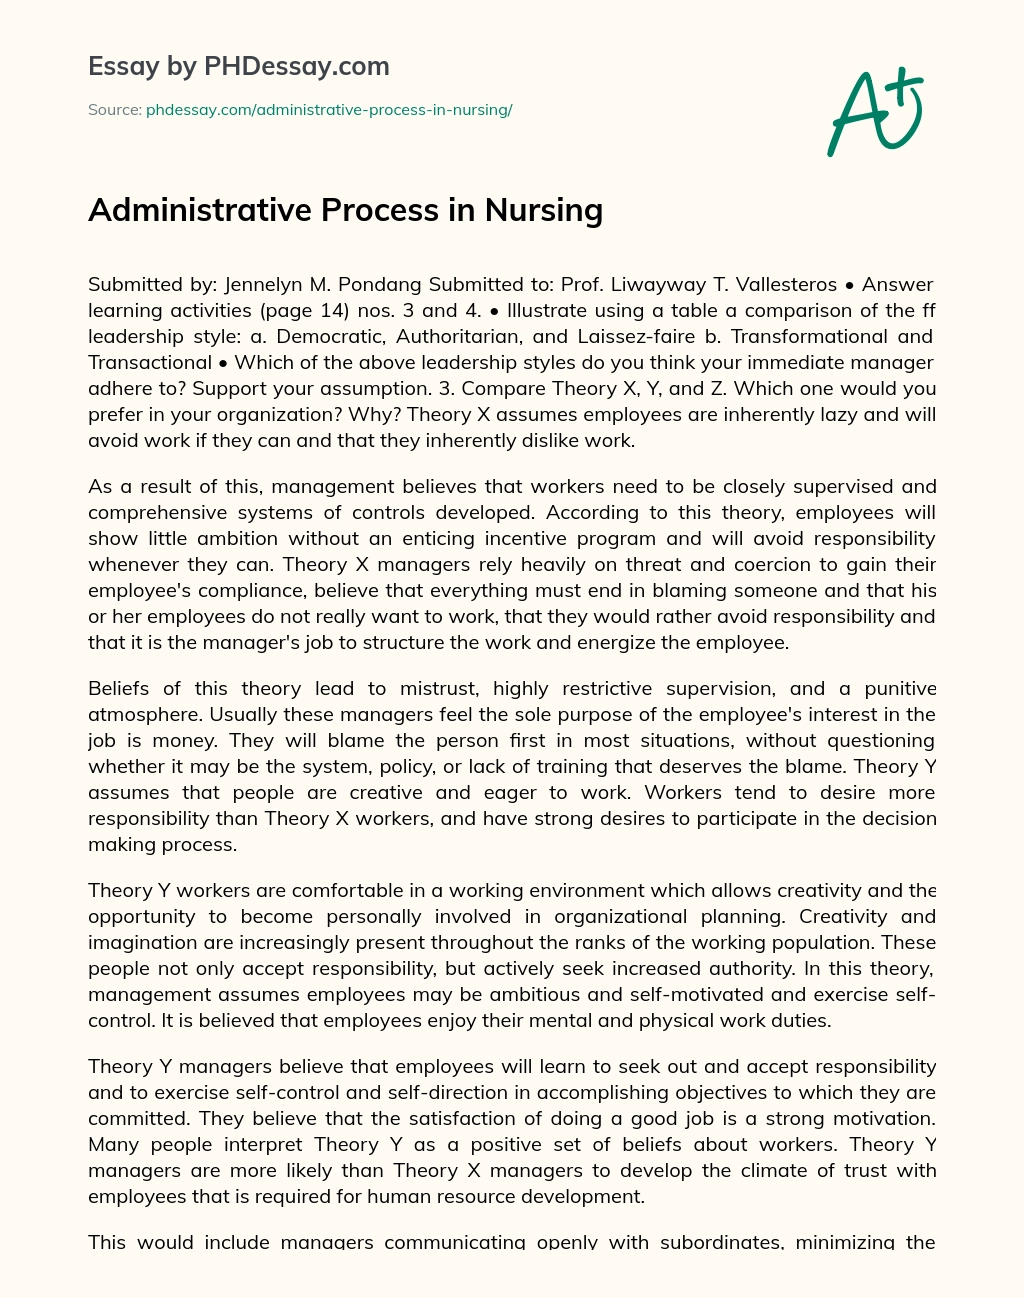 Administrative Process in Nursing essay